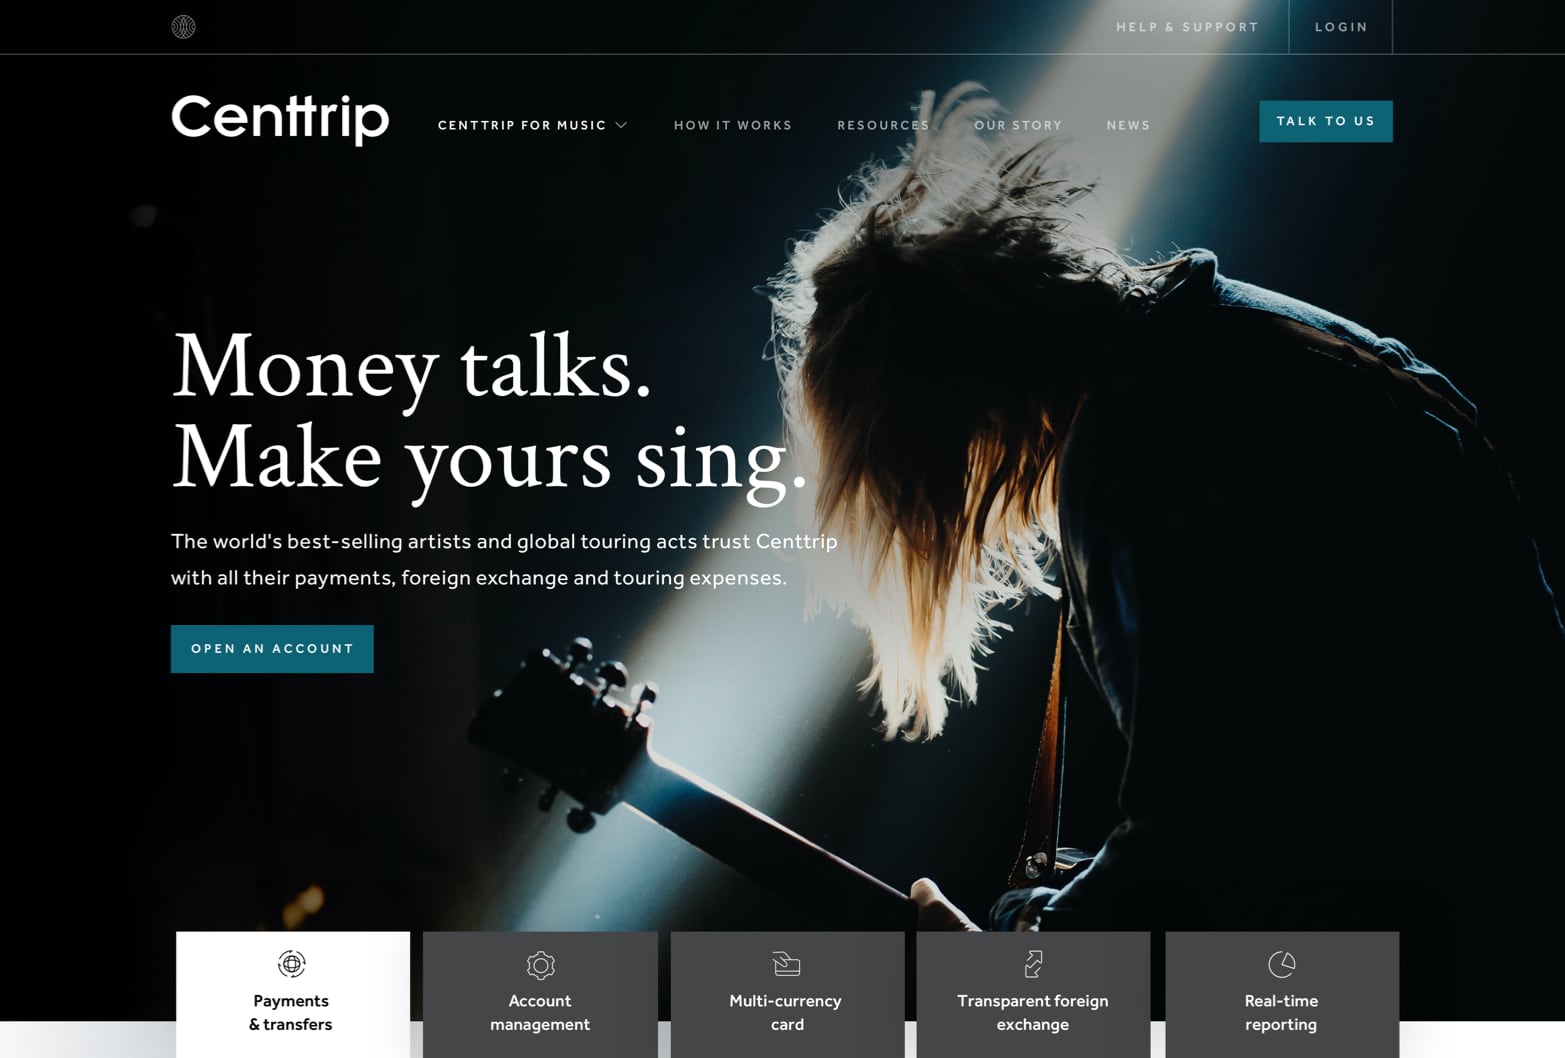 The Centtrip website